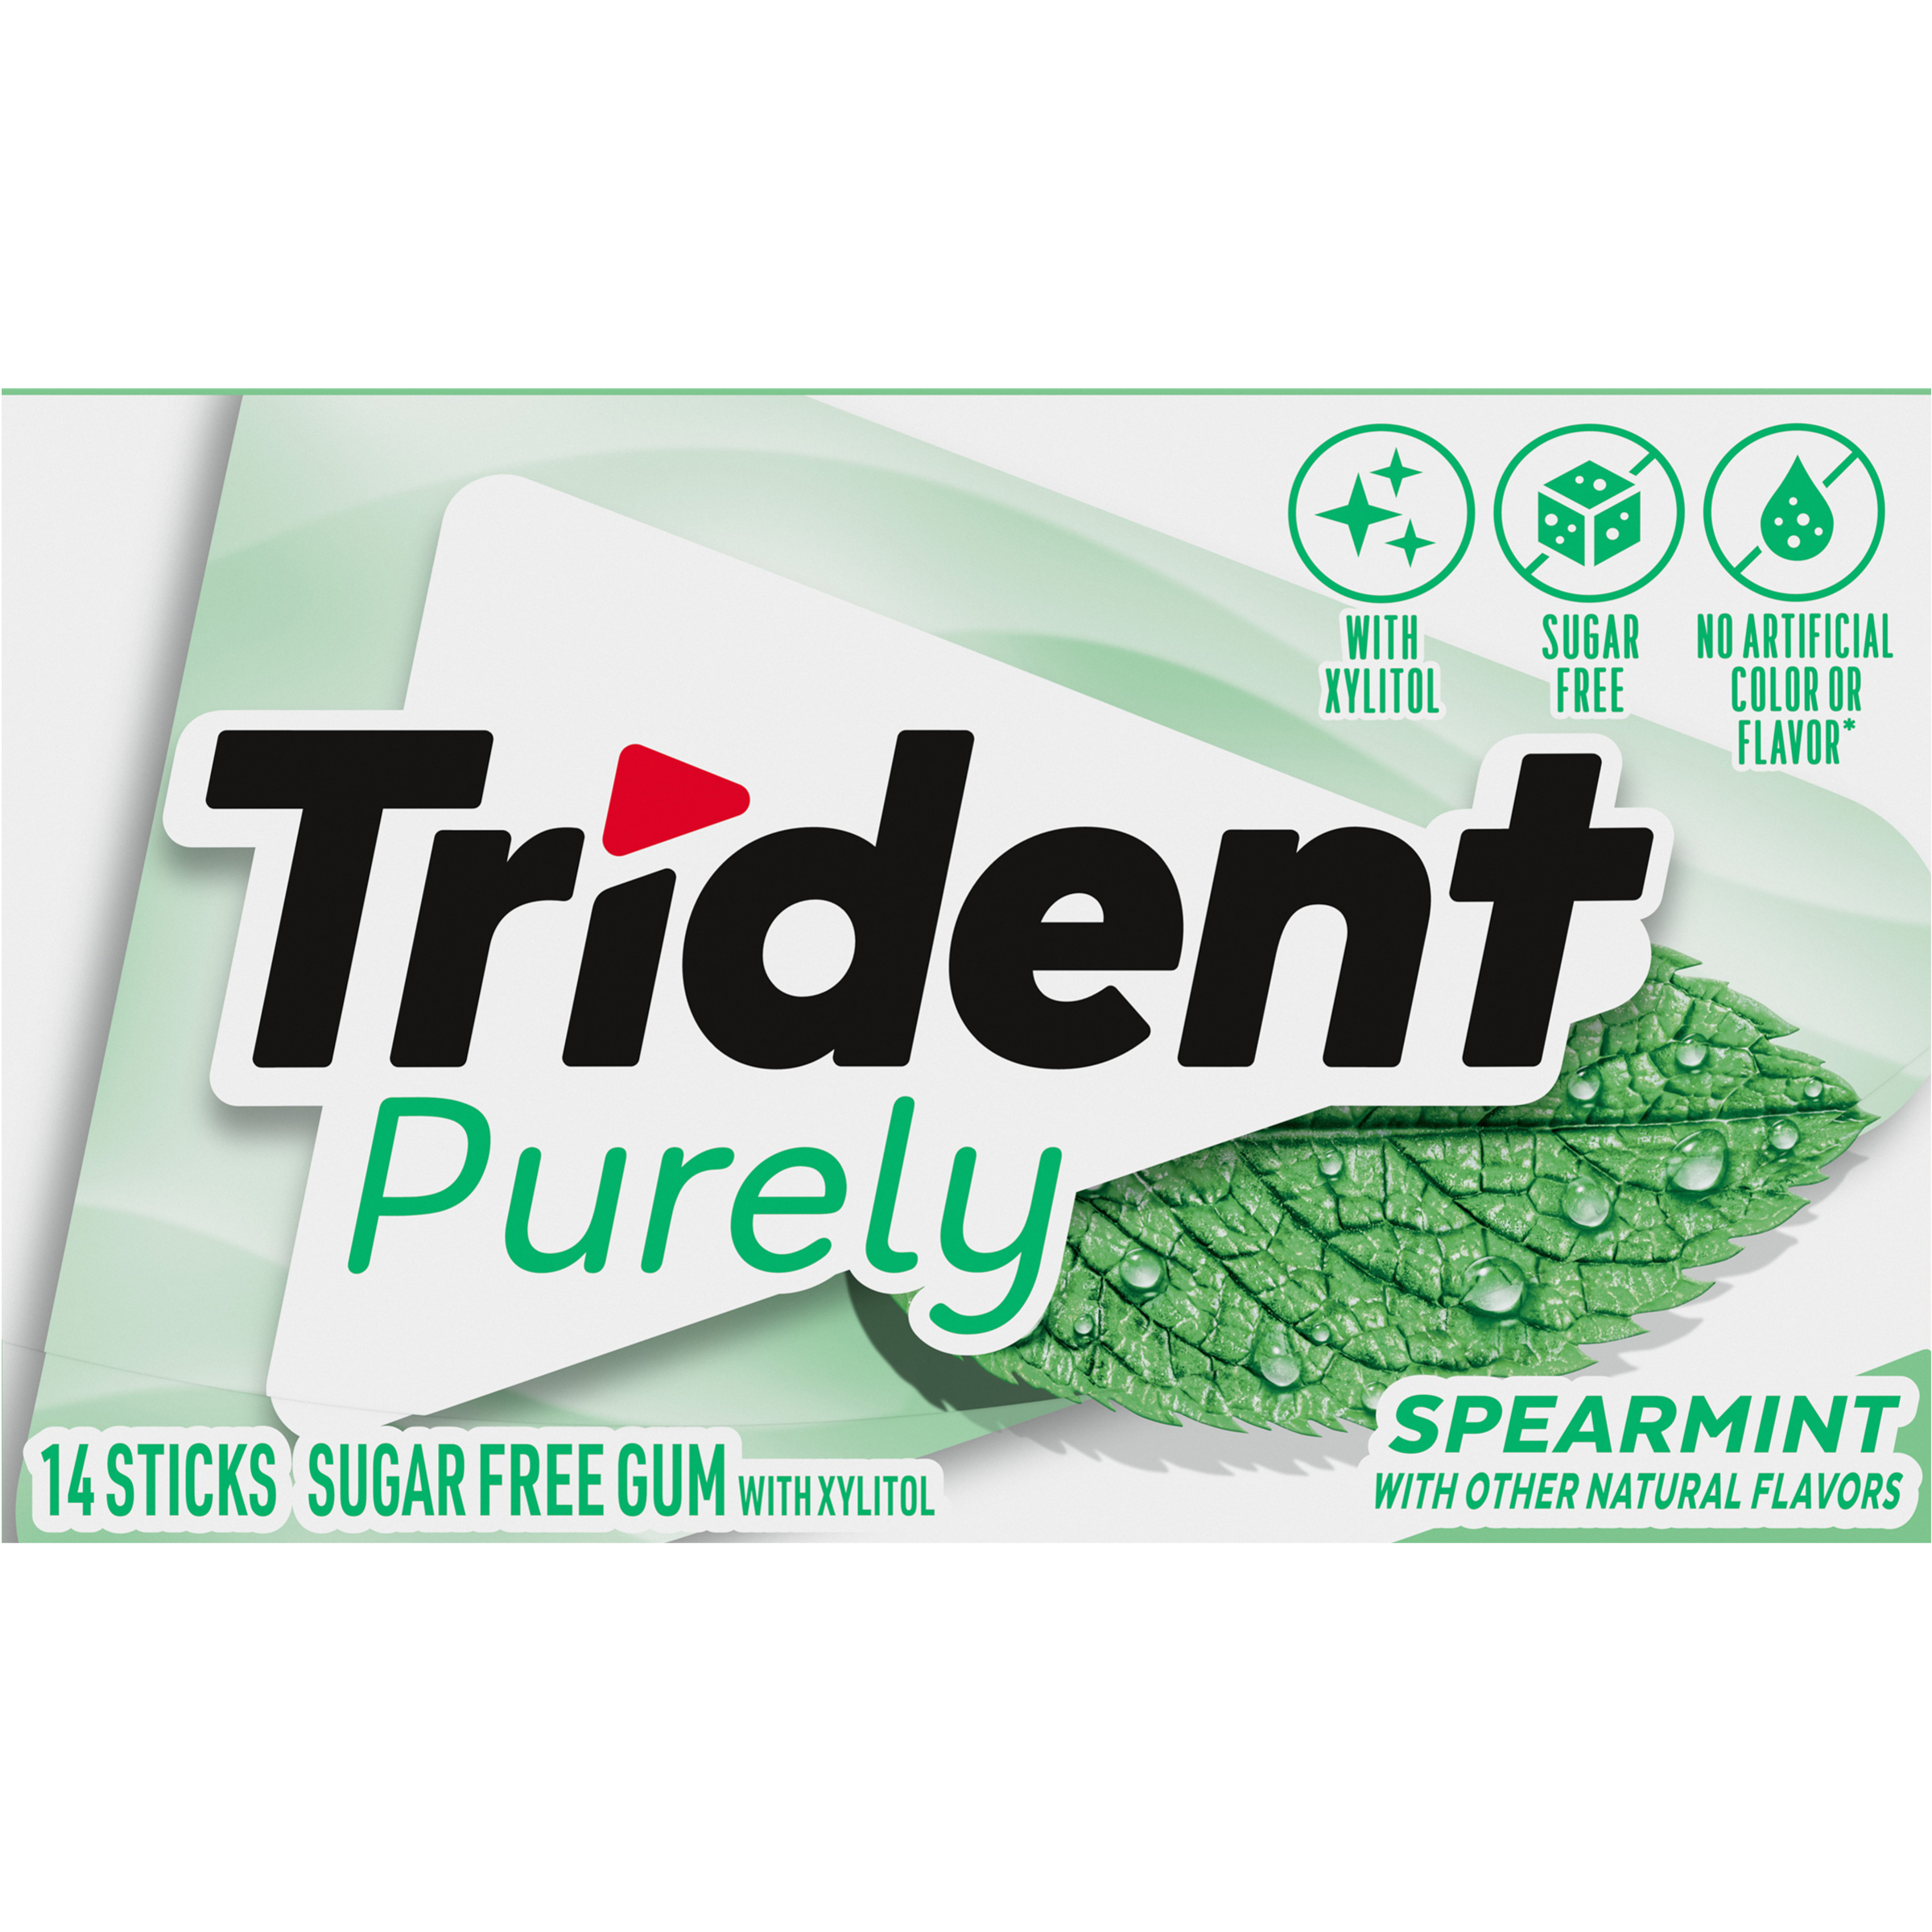 Trident Purely Spearmint (14 pieces)